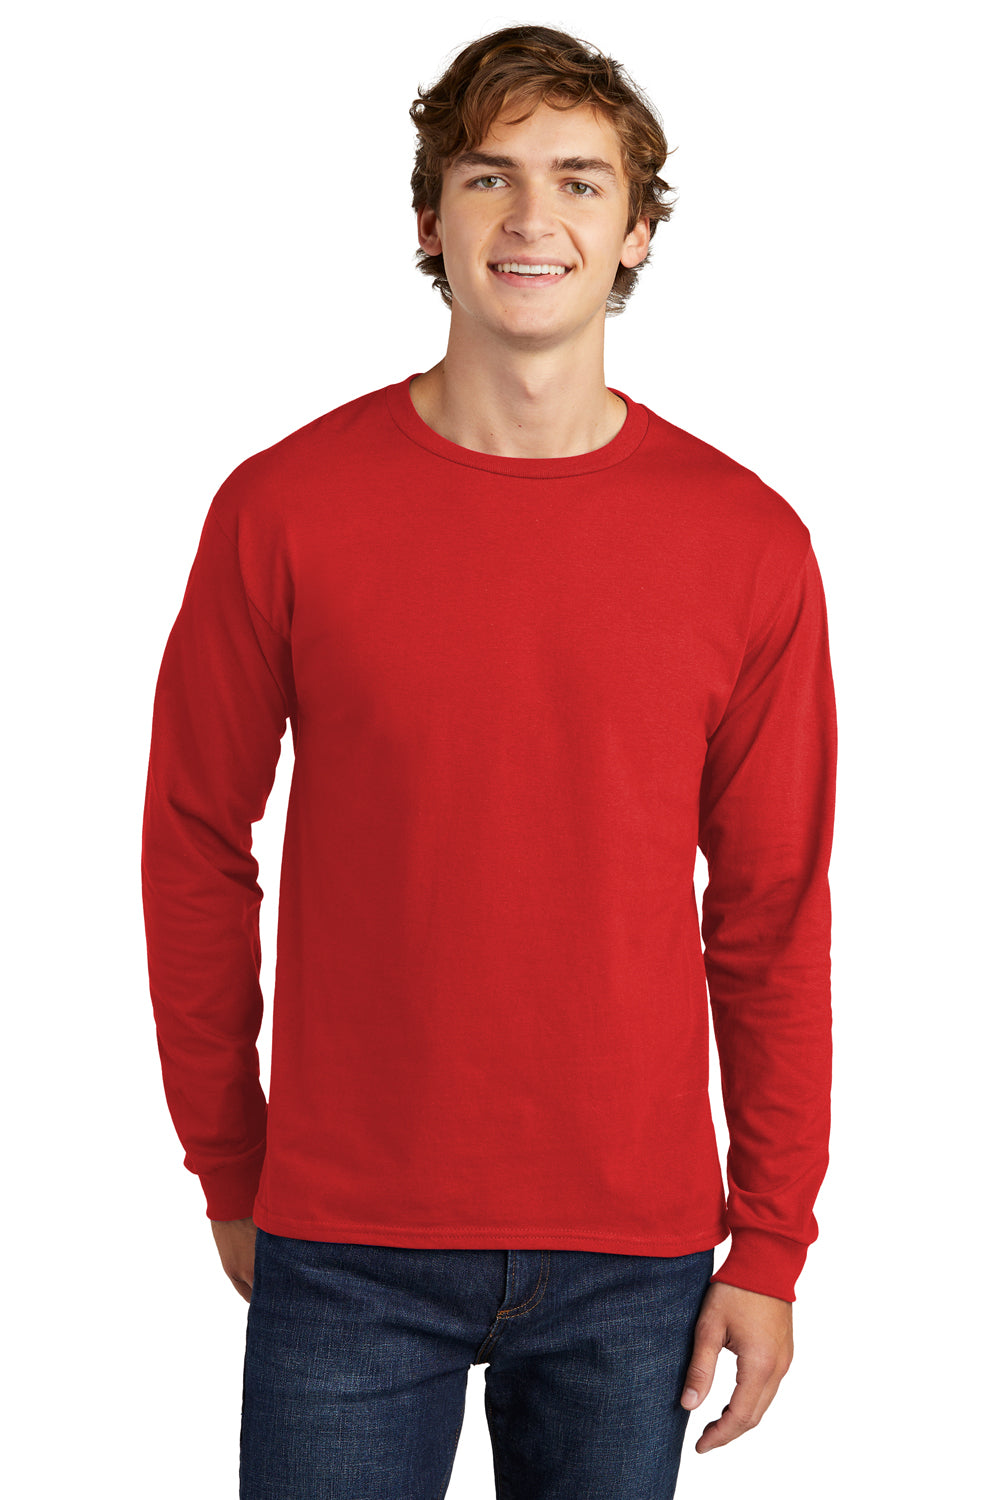 Hanes 5286 Mens ComfortSoft Long Sleeve Crewneck T-Shirt Athletic Red Front